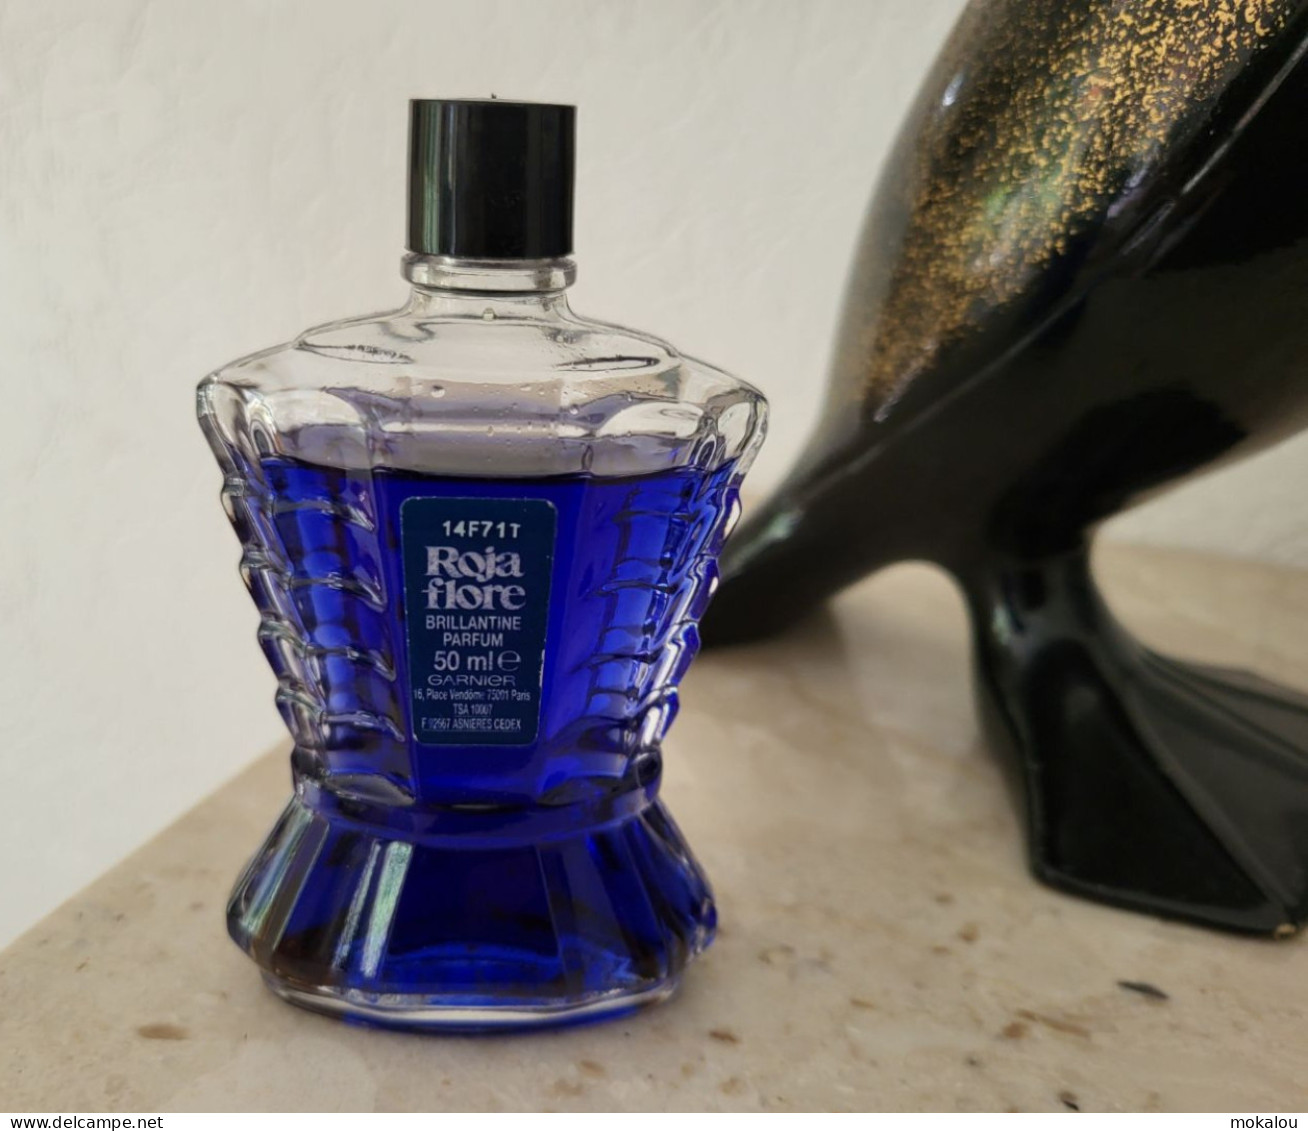 Flacon Forvil Rosa Flore Brillantine Parfum 50ml - Donna